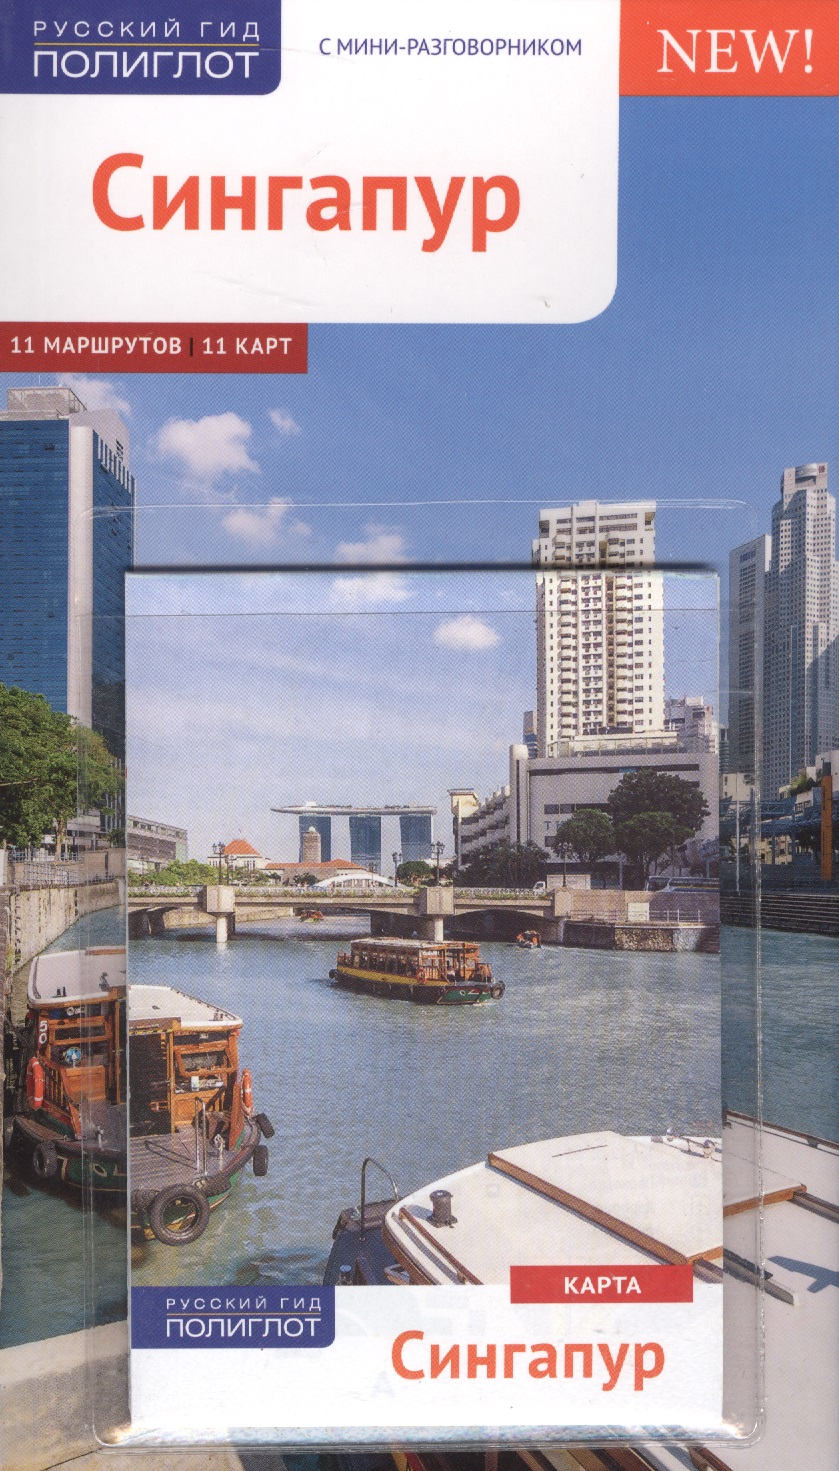 Сингапур браун дж бэкенхеймер маргарет сингапур путеводитель